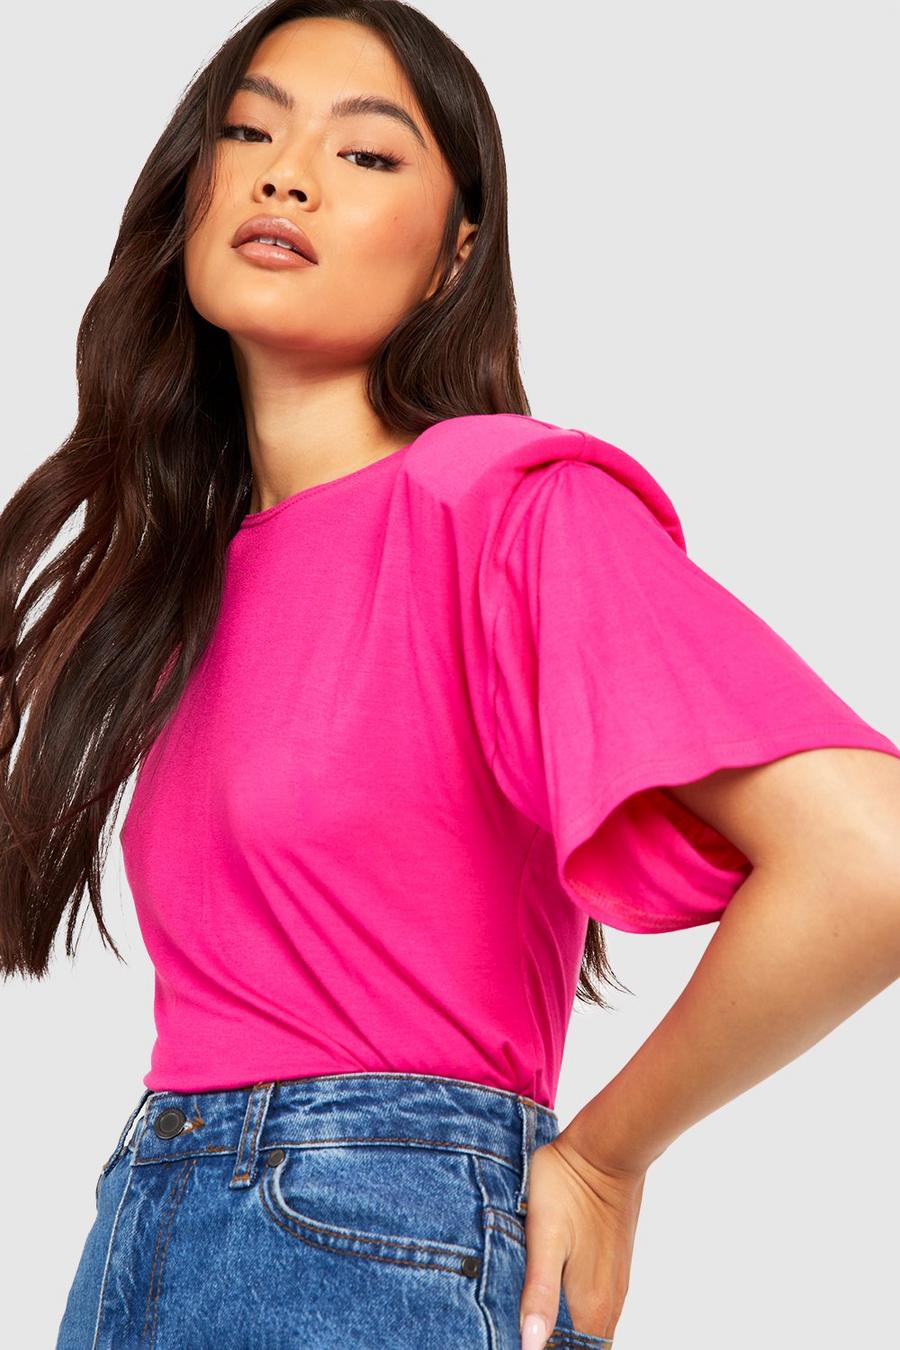 Camiseta con hombreras, Hot pink image number 1